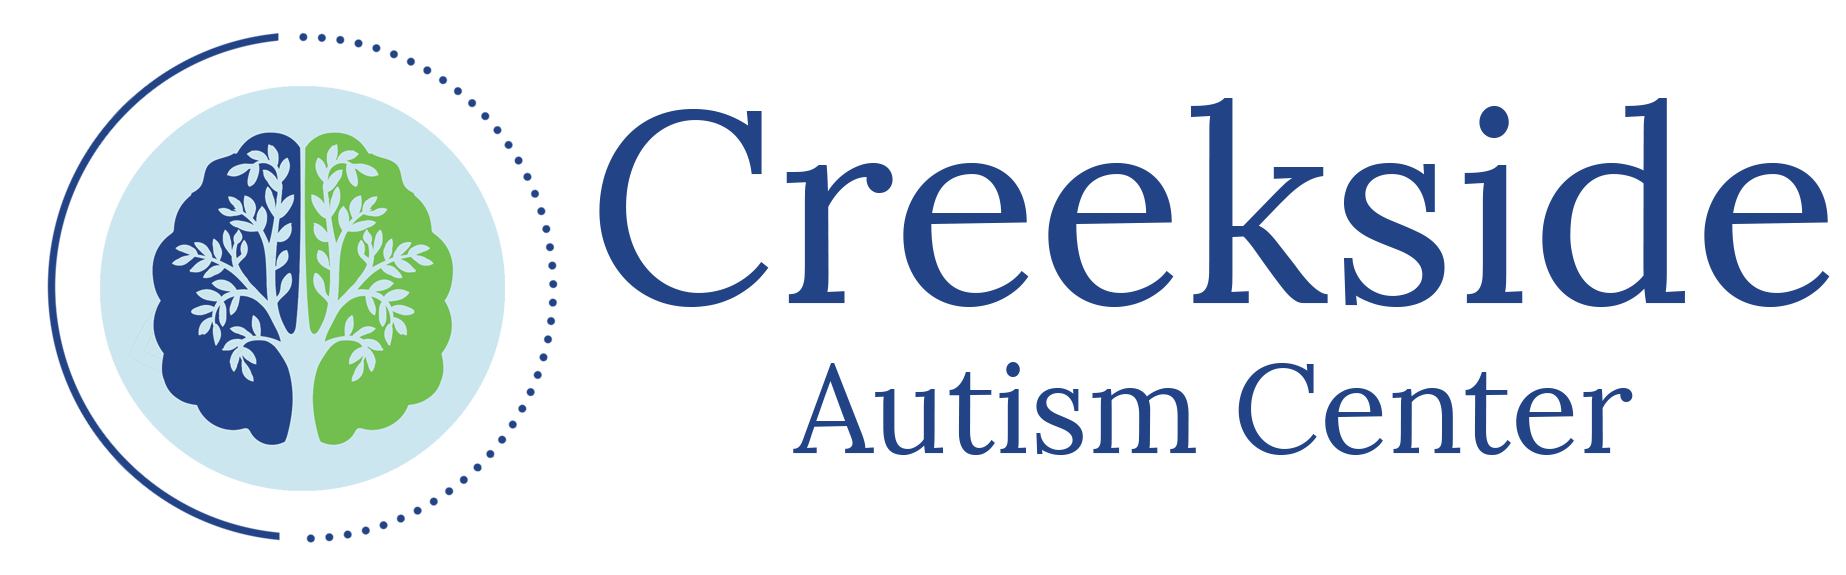 Creekside Autism Center